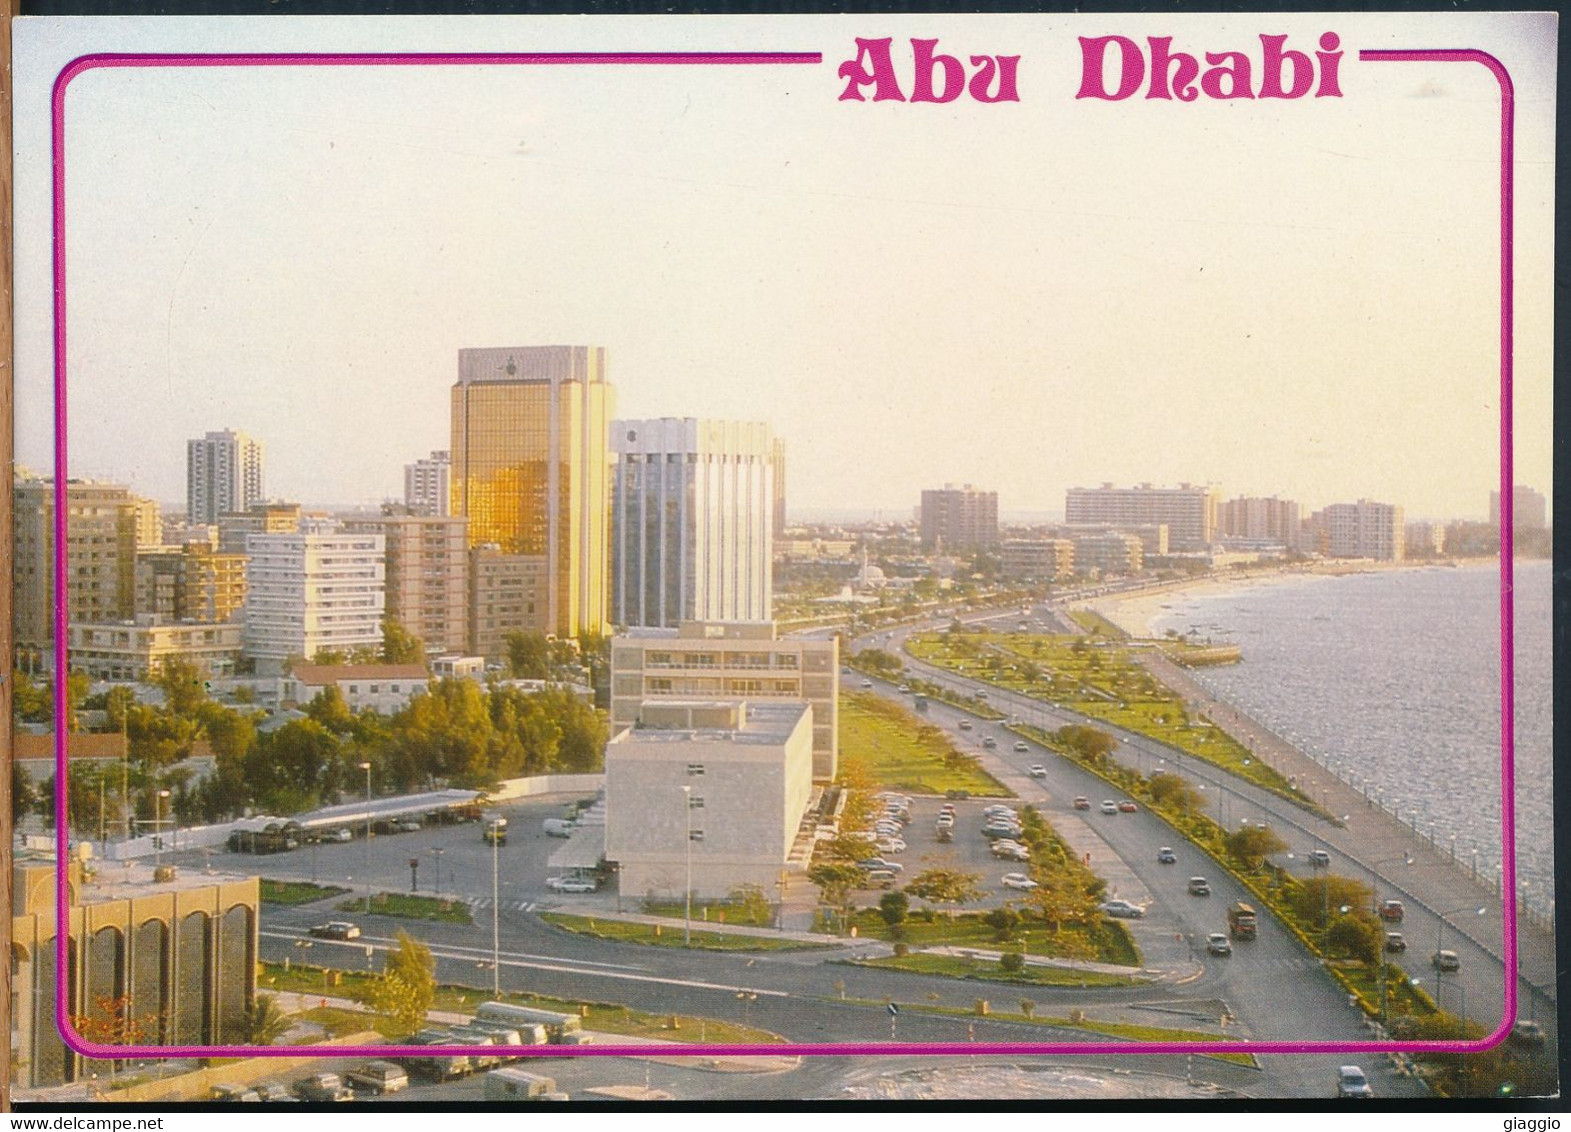 °°° 26035 - UAE - ABU DHABI - CORNICHER ROAD °°° - Emirats Arabes Unis